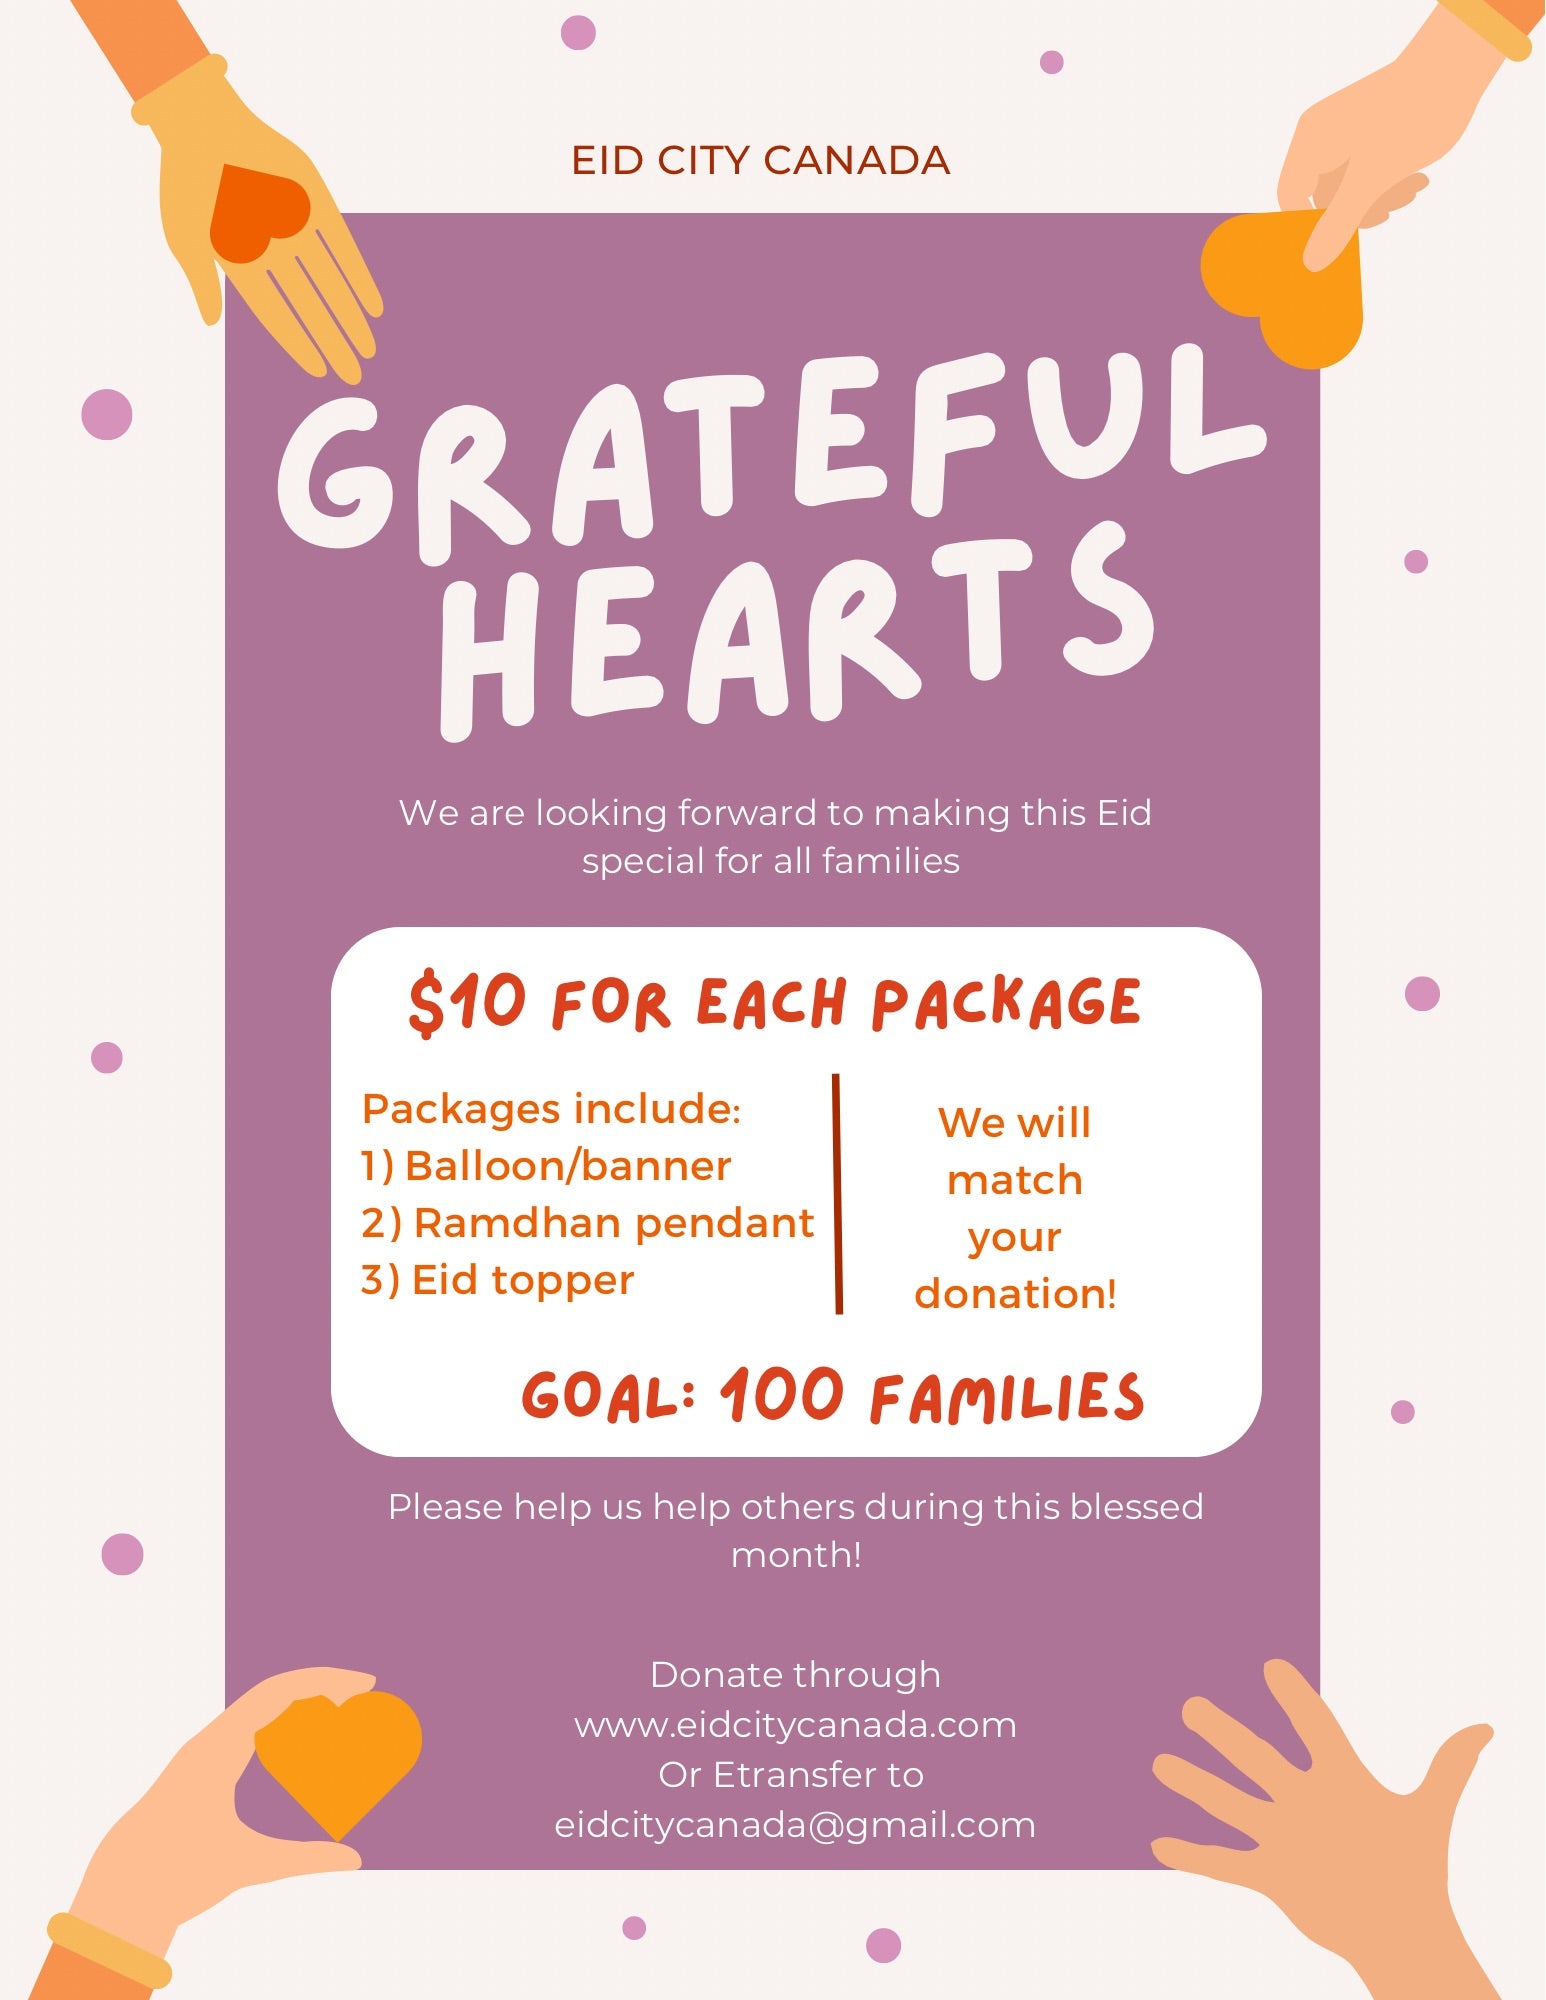 Grateful hearts package goal Eid City Canada